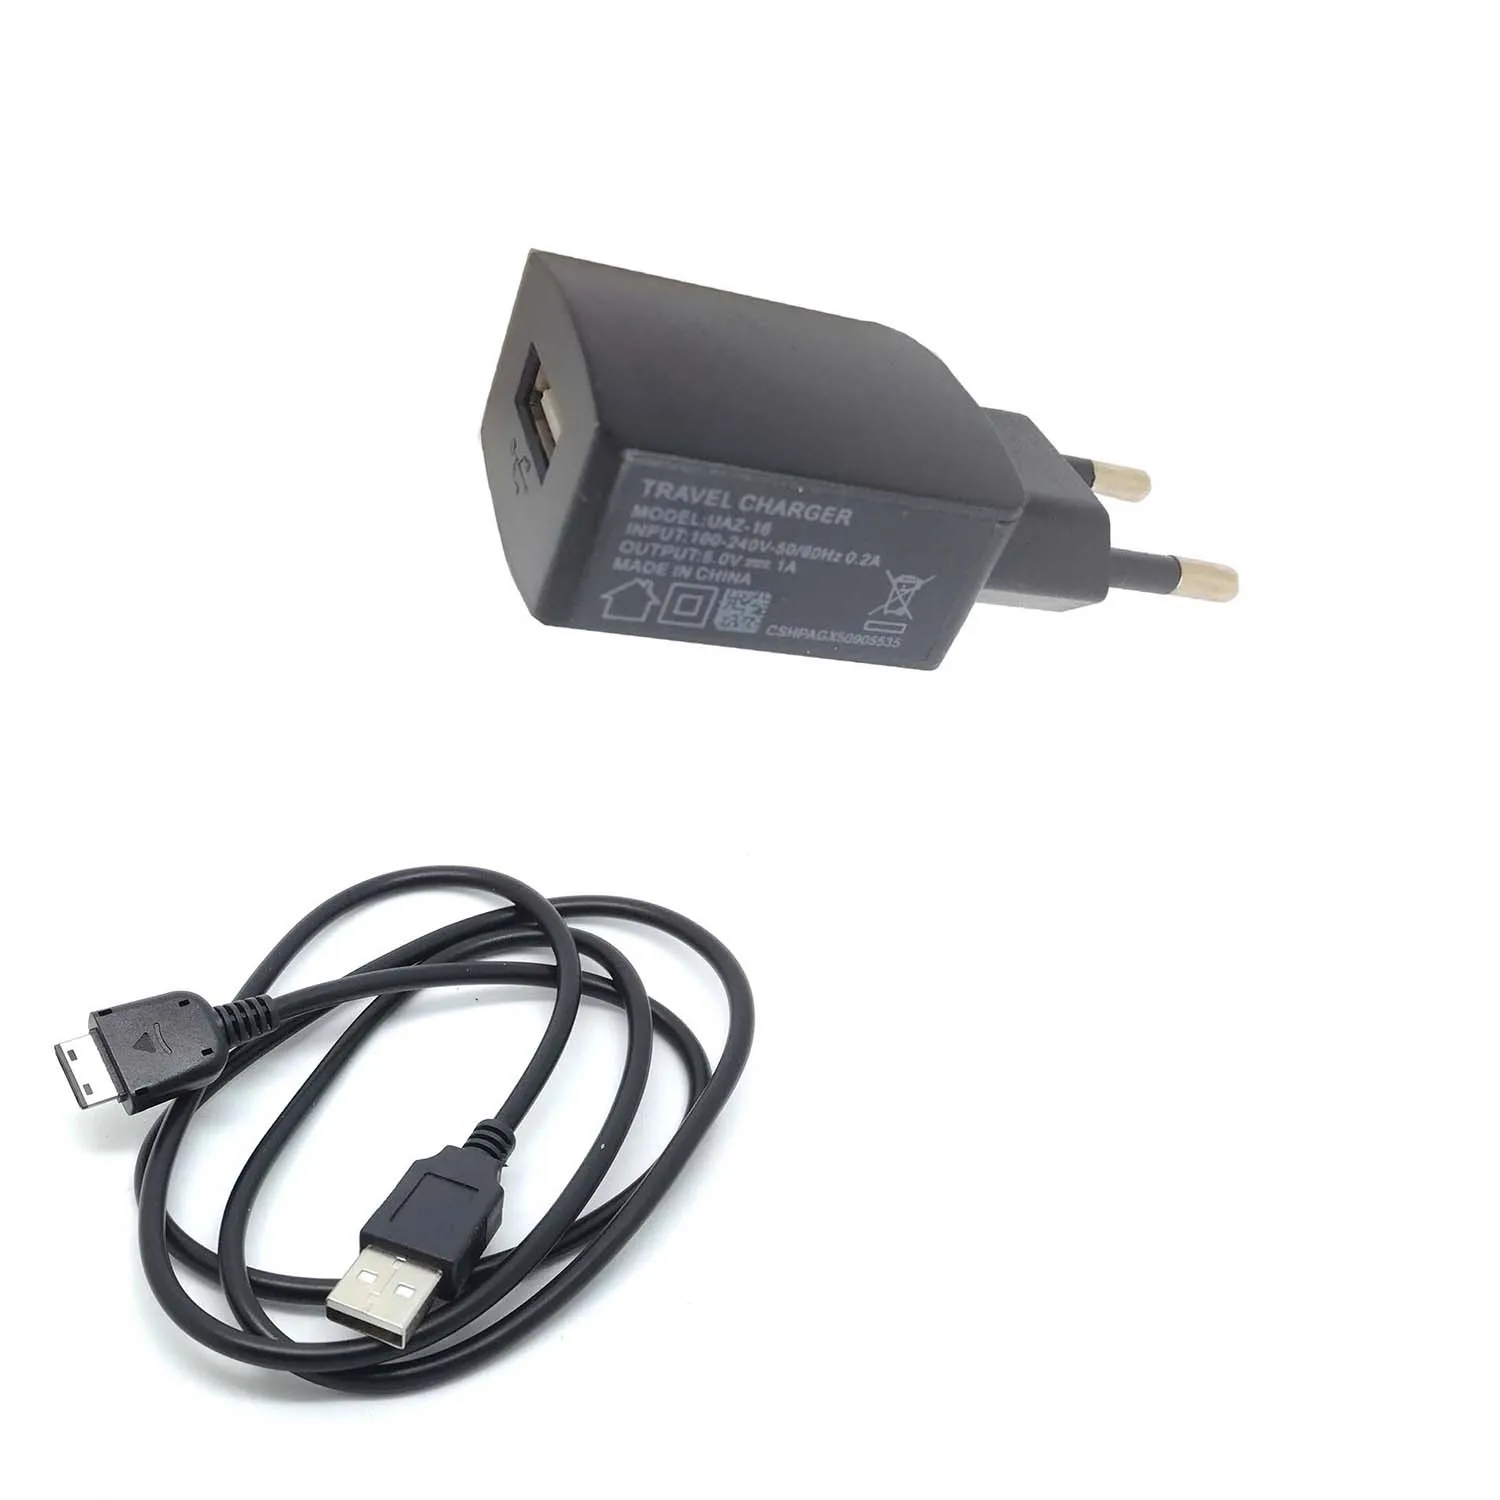 USB Charger cable  for SAMSUNG DM-S105 GT-S3650 GT-S5230 Instinct Mini Instinct S30 Pixon M8800 SCH-i770 i910 R200 R210 images - 6